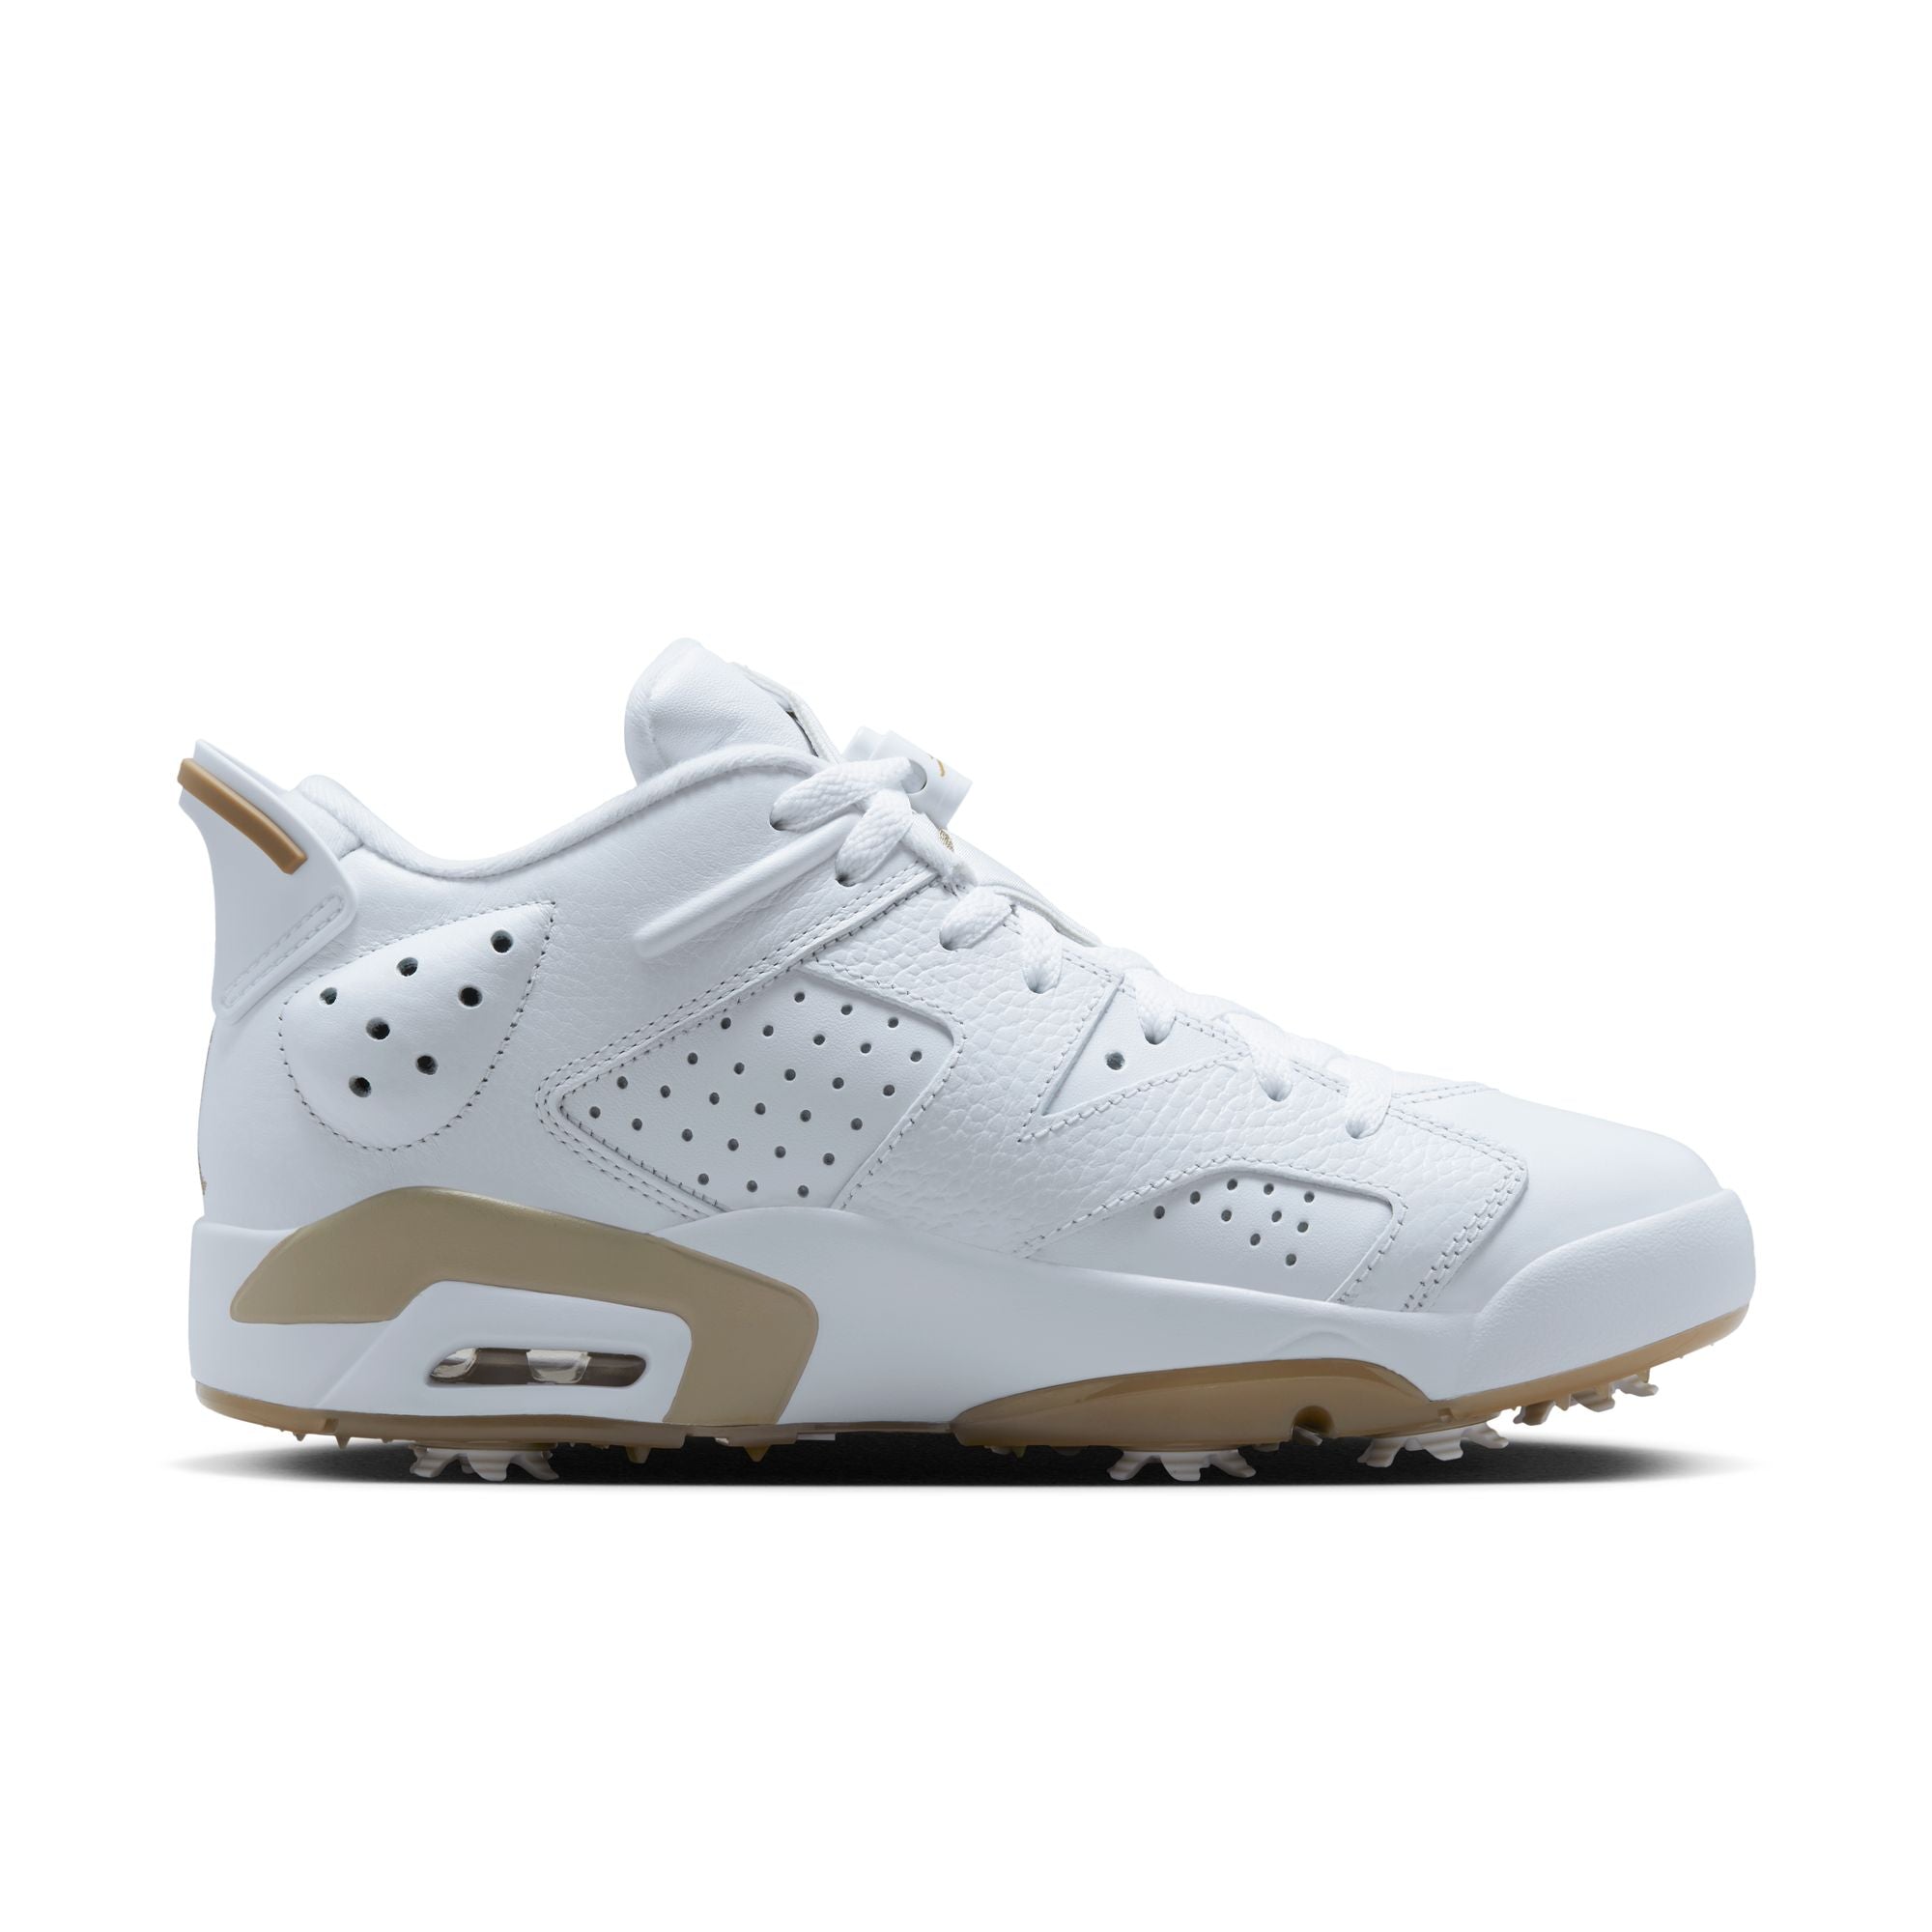 Jordan Retro 6 G Men's Golf Shoes